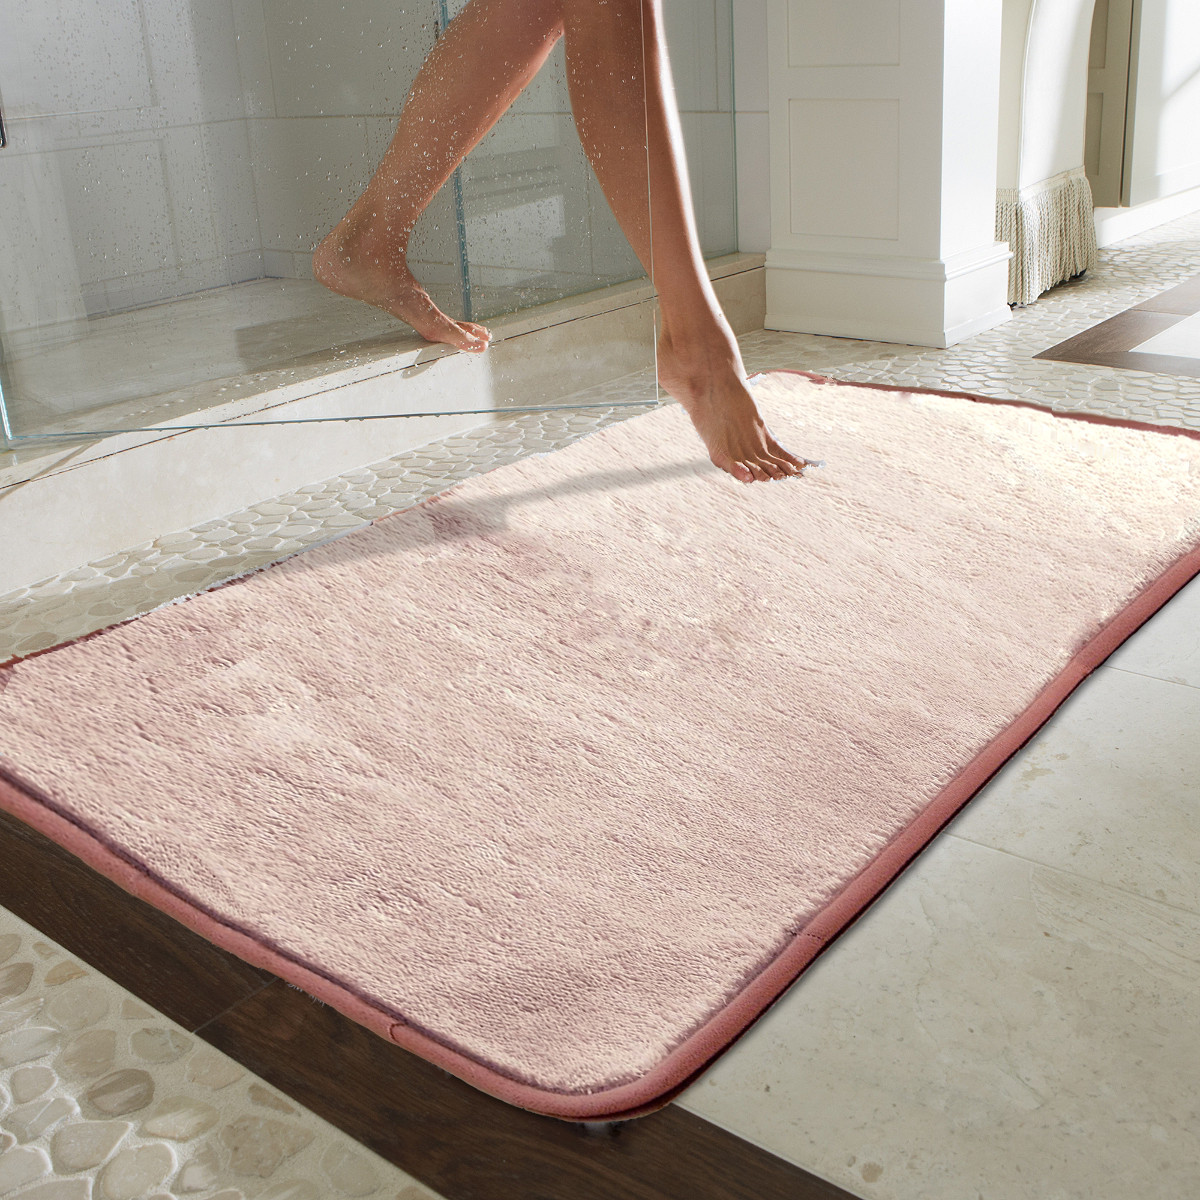 Best ideas about Microfiber Bathroom Mats
. Save or Pin Microfiber Absorbing Bath Mat Bathroom Rug Now.